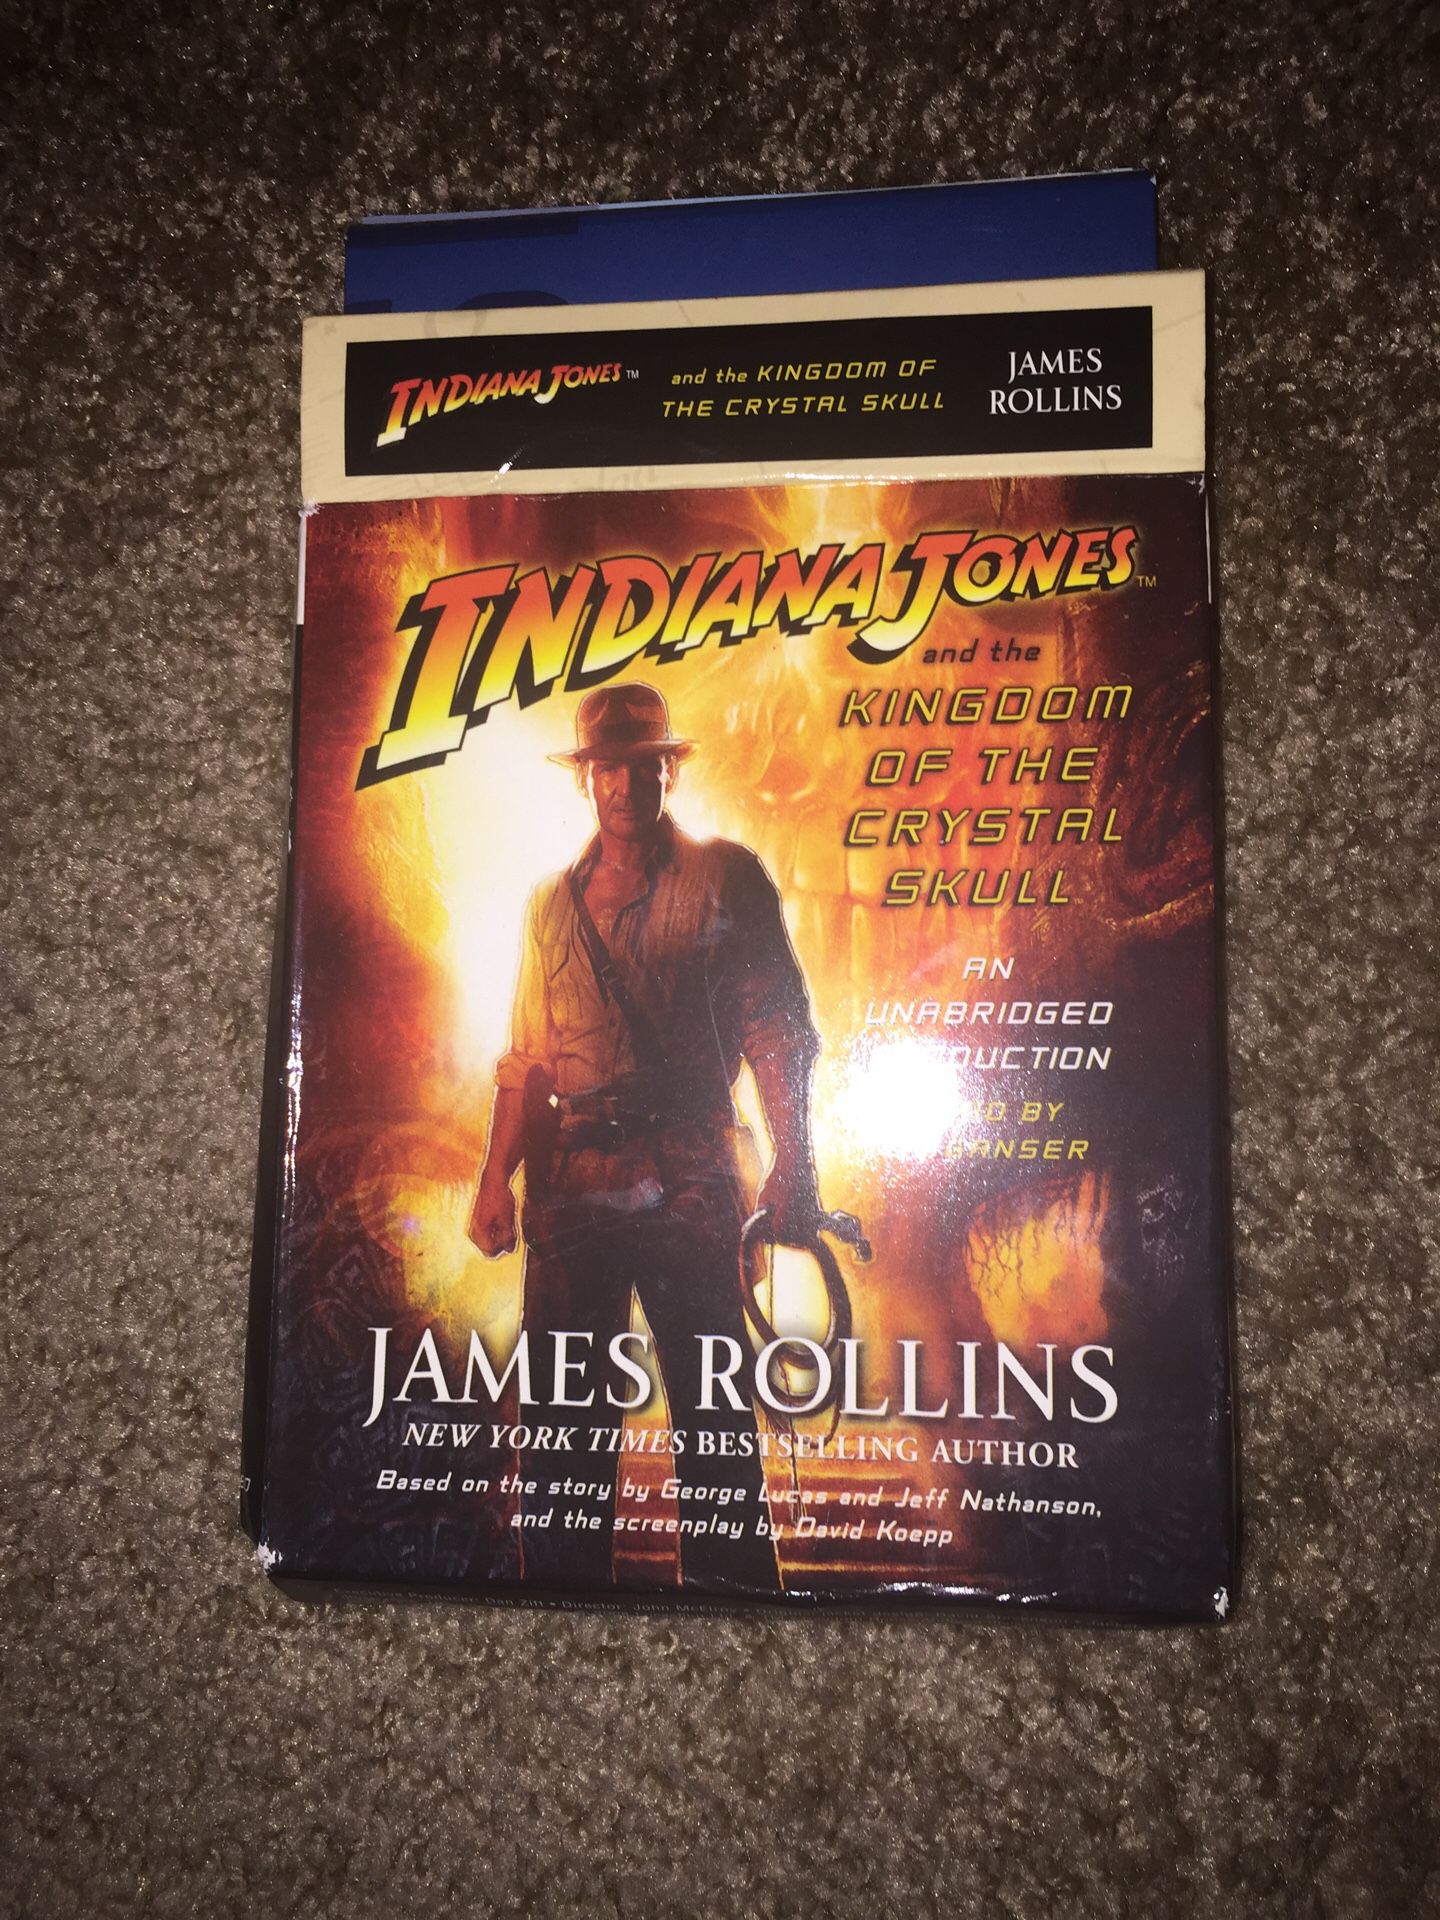 Indiana Jones (collection) 7 DVDS